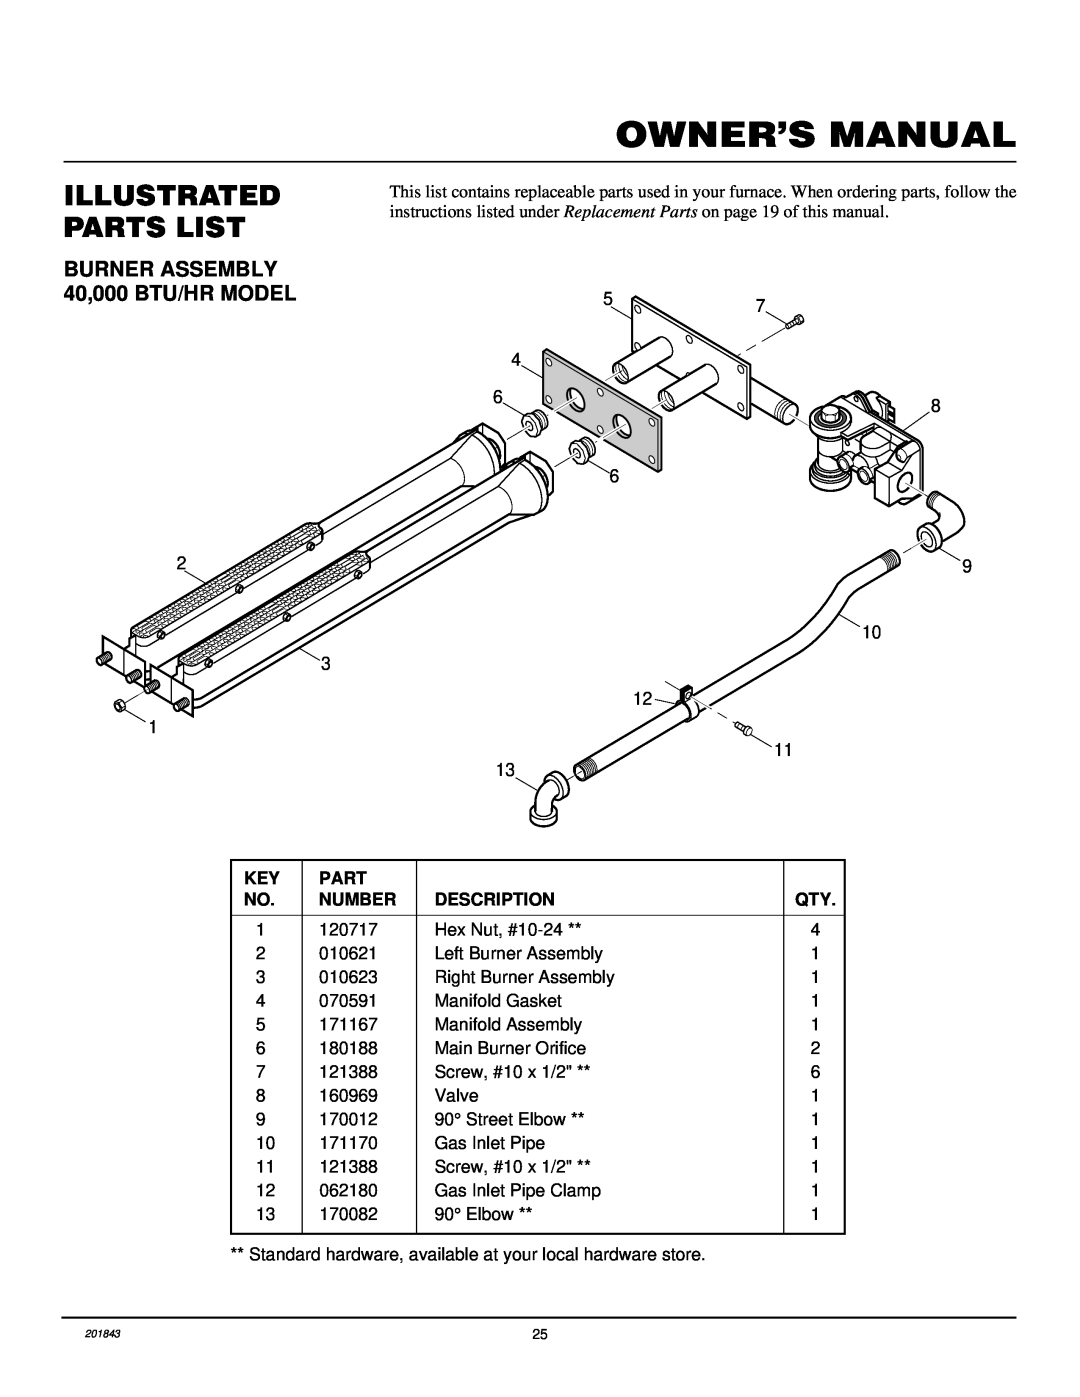 Williams 4003531, 2503531 installation manual Illustrated Parts List, BURNER ASSEMBLY 40,000 BTU/HR MODEL, 29 10 3 12 1 